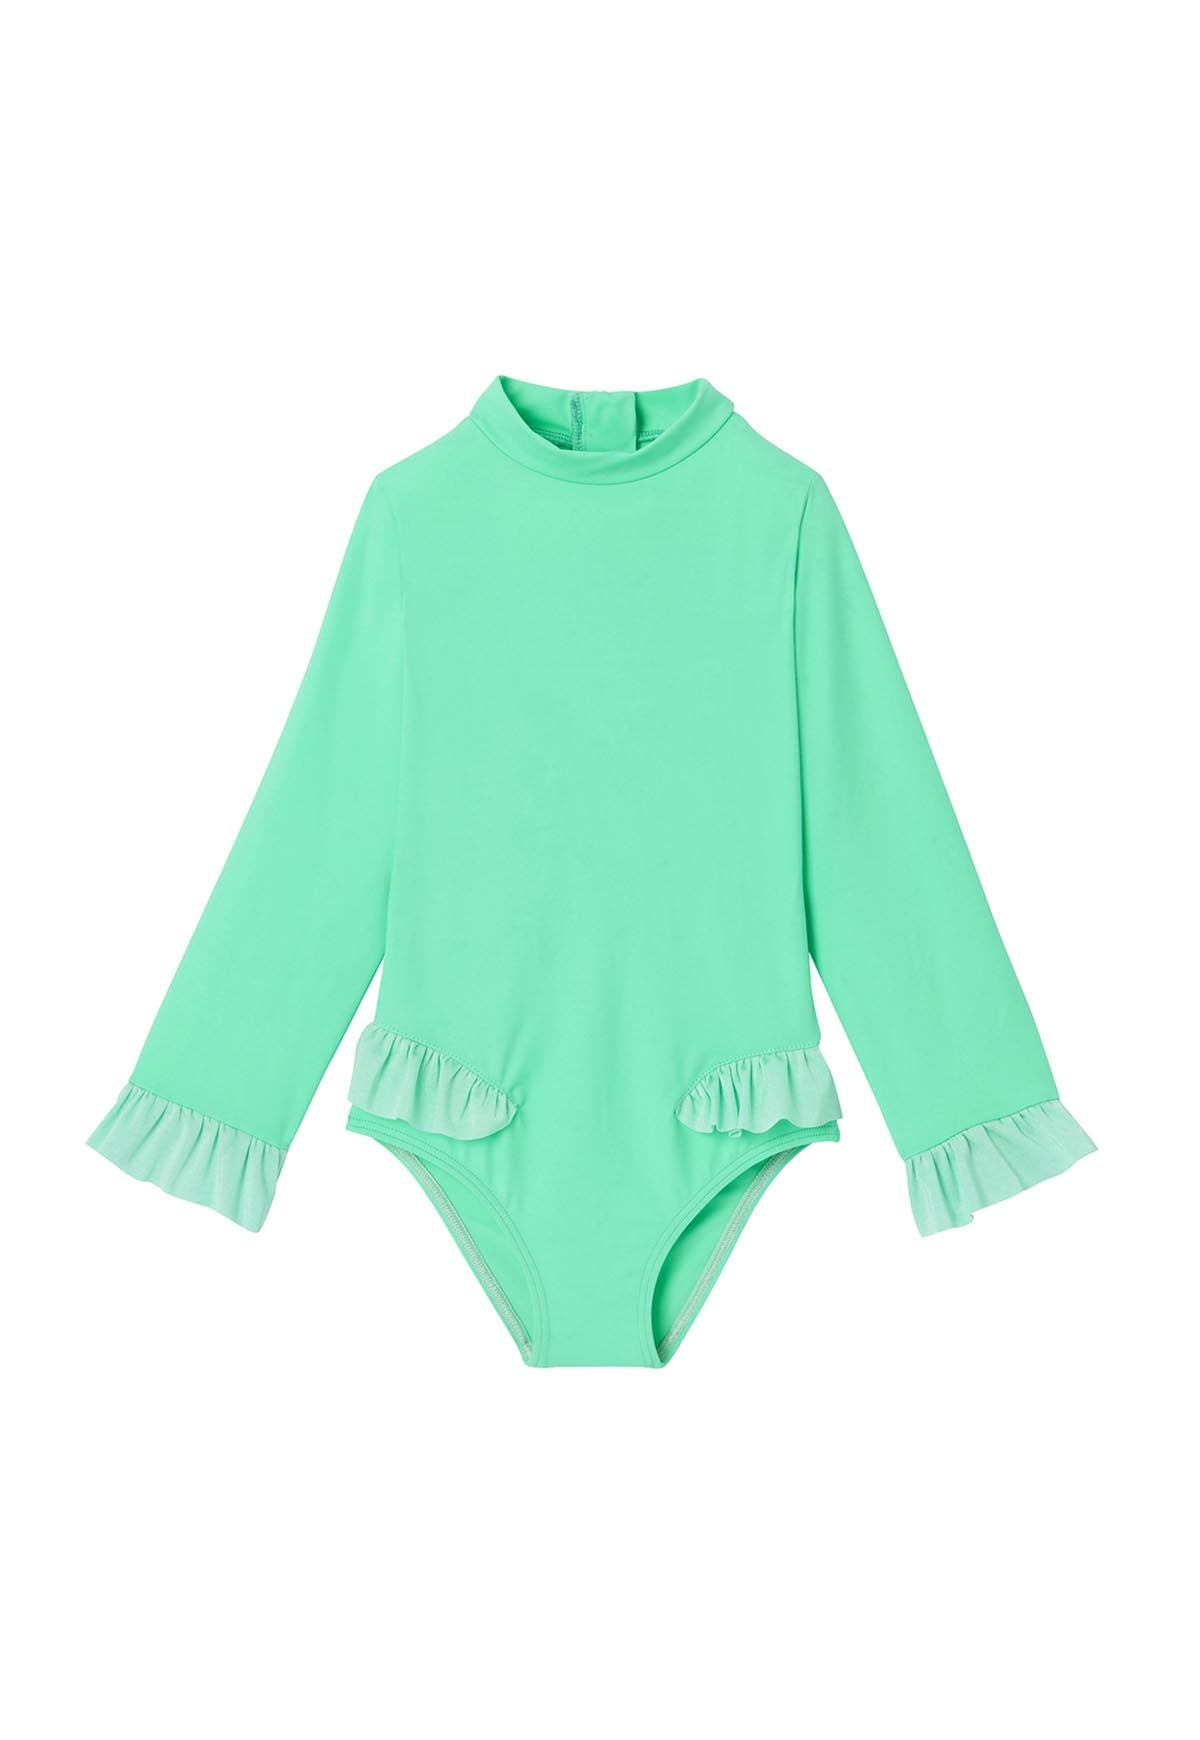 Long sleeve baby swimsuit, UPF50+, mint green